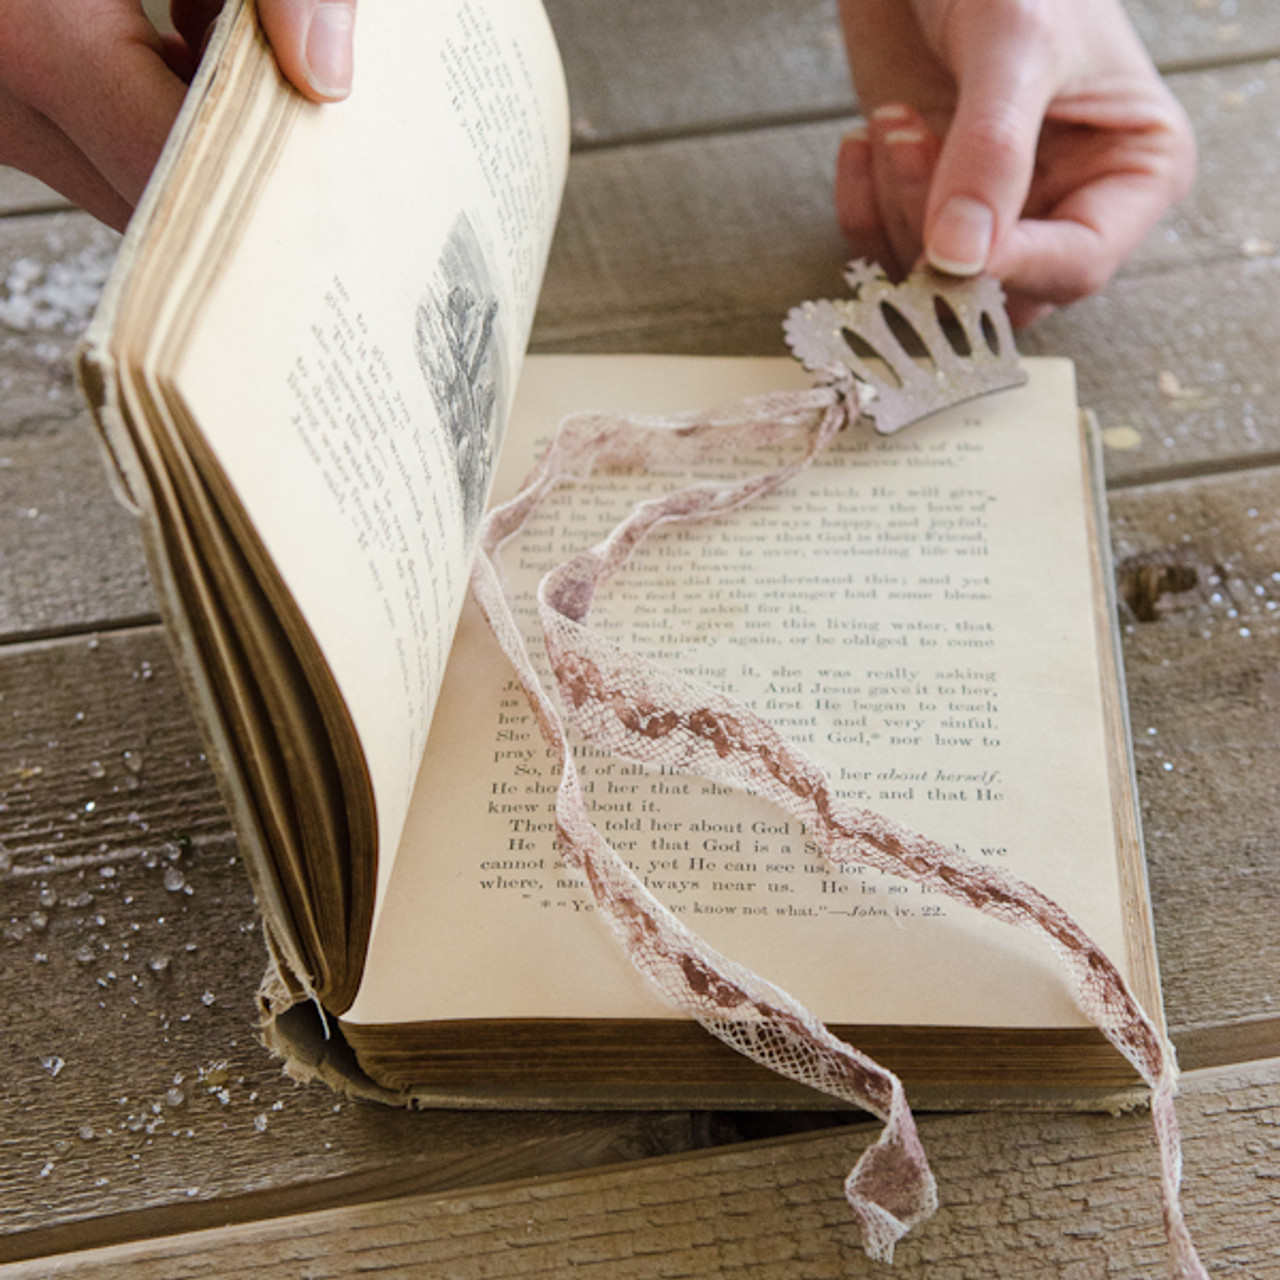 DIY Bookmarks: 5 Ways - Stampington & Company